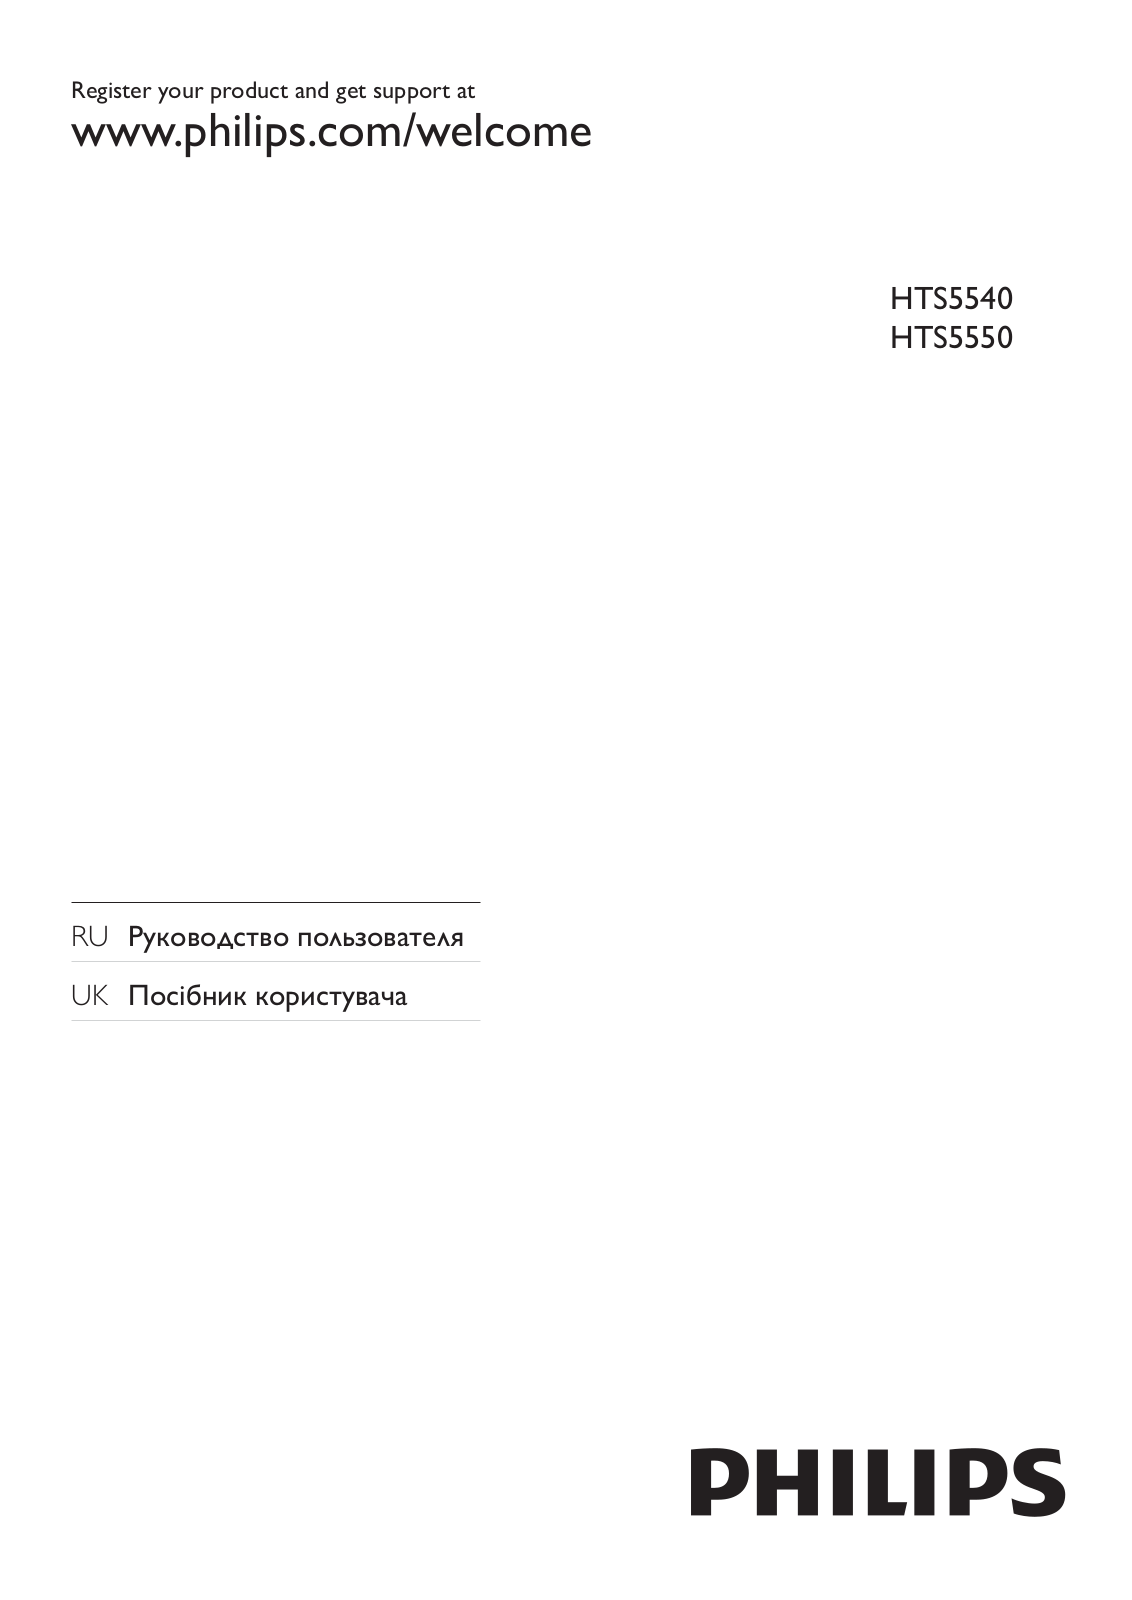 Philips HTS5550, HTS5540 User Manual